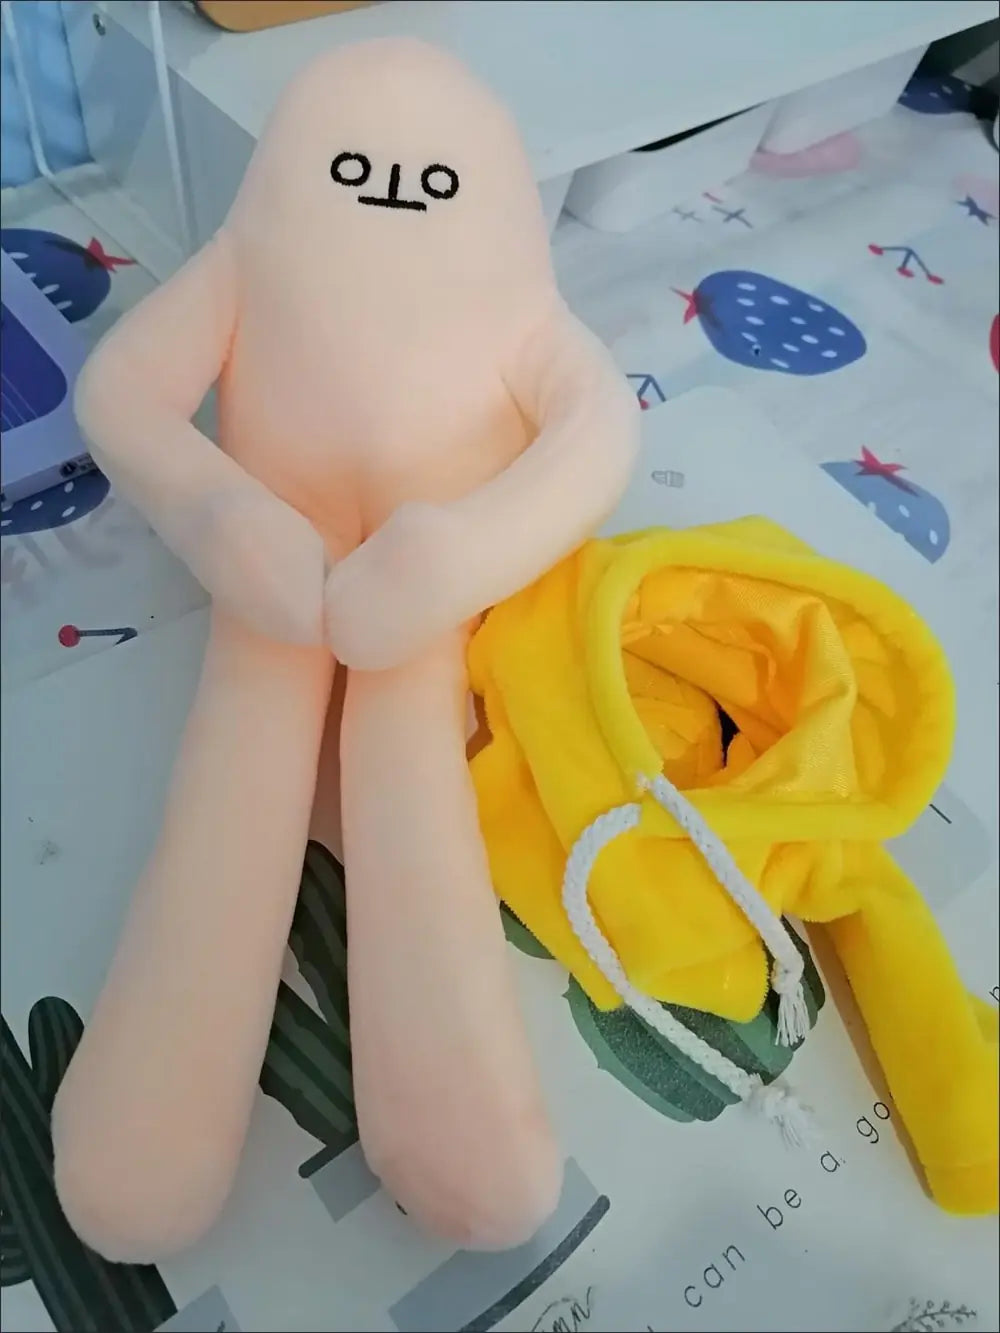 Soft Stuffed Banana Doll